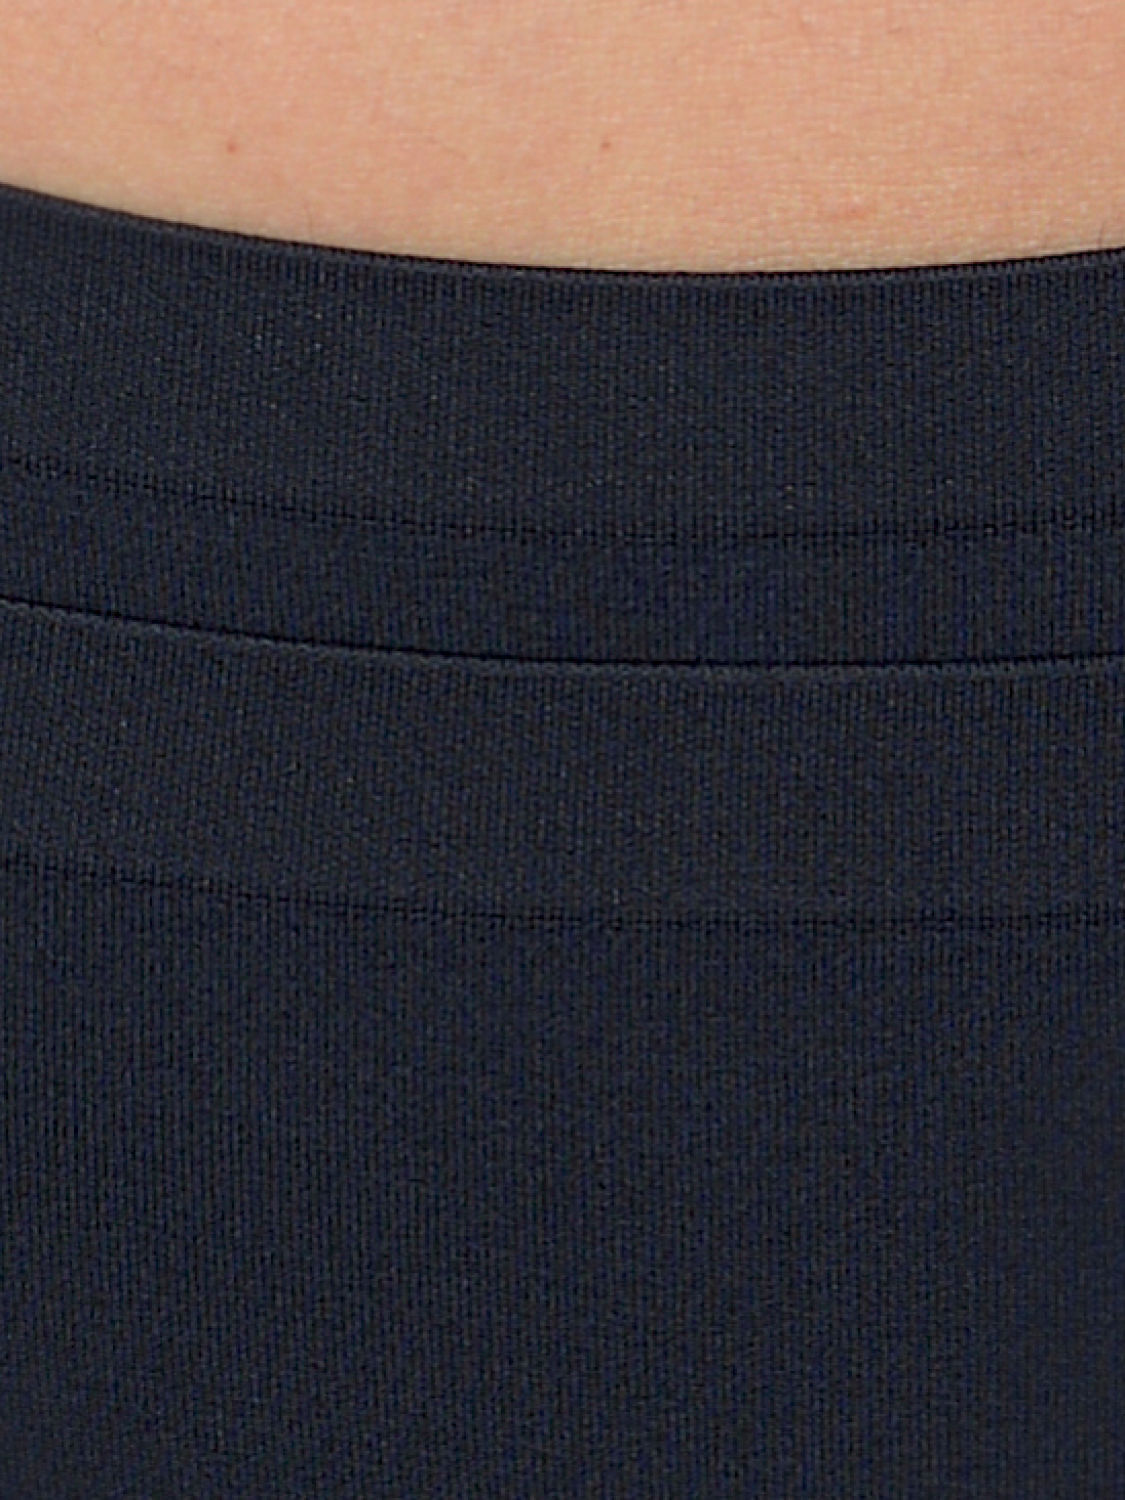 Medela Schwangerschafts-Slips Doppelpack Farbe Black